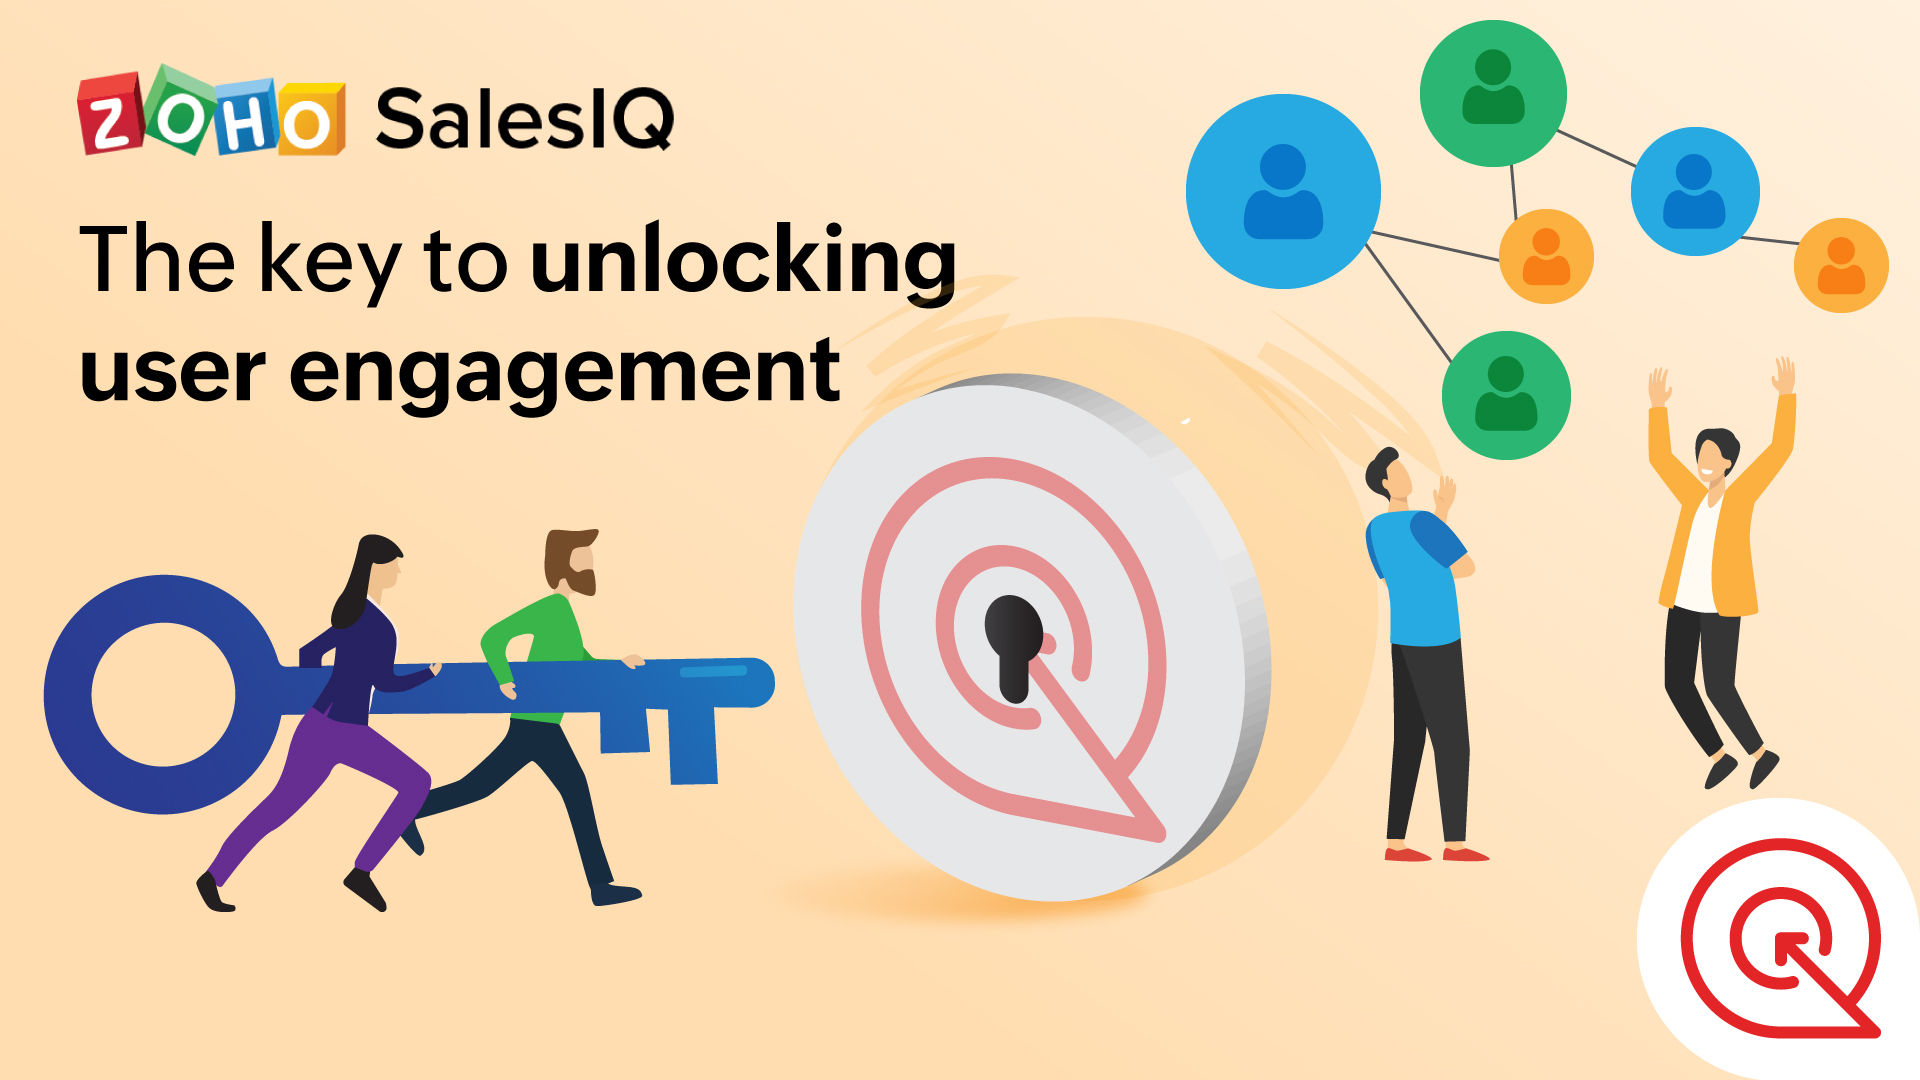 Zoho SalesIQ: The key to unlocking user engagement